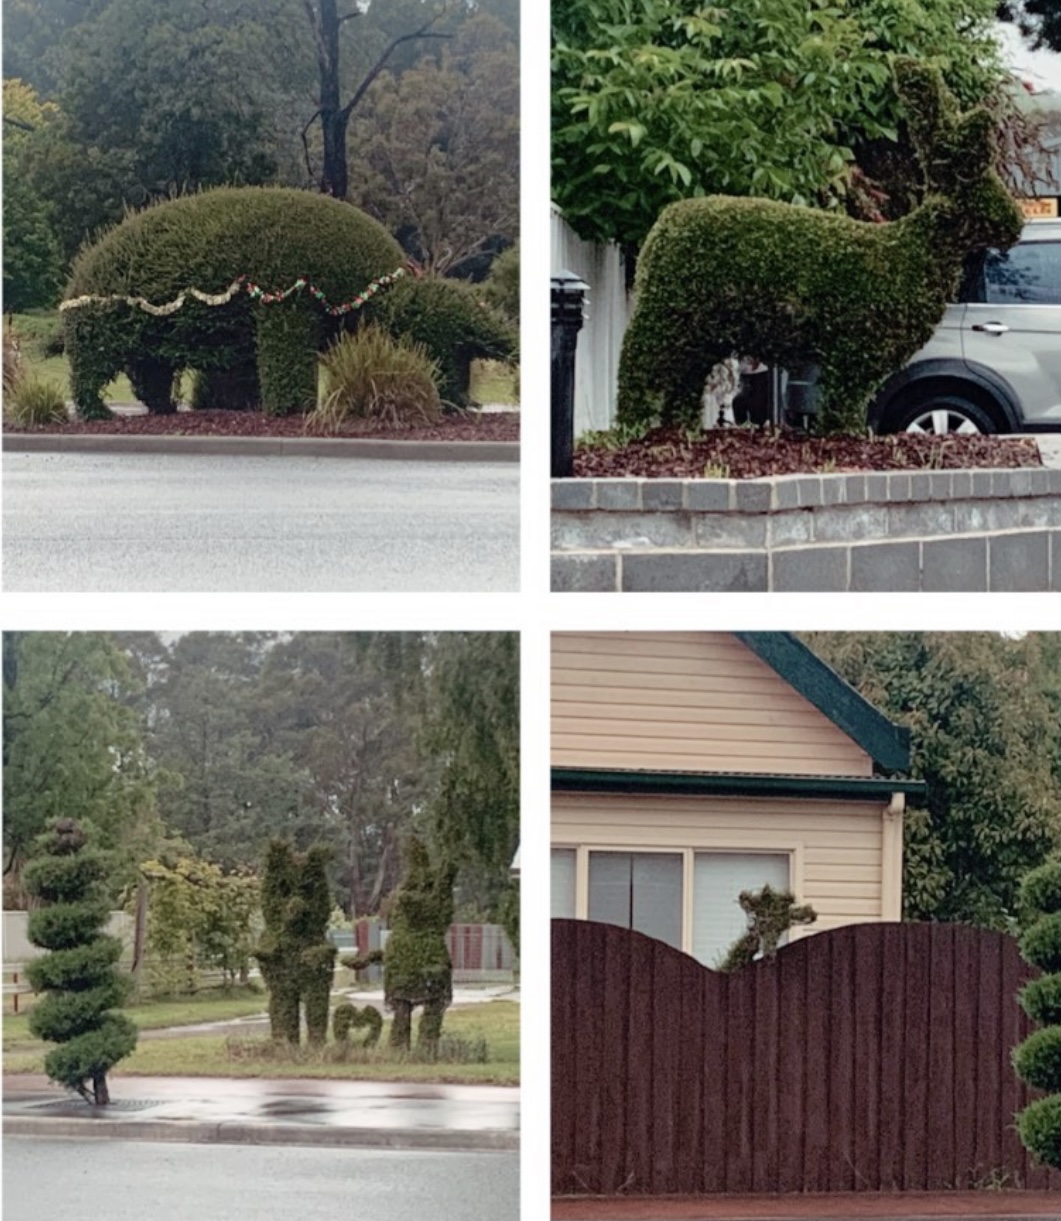 Railton Tasmania - Collage of bushes shaped liked animals - Things to Do in Tasmania